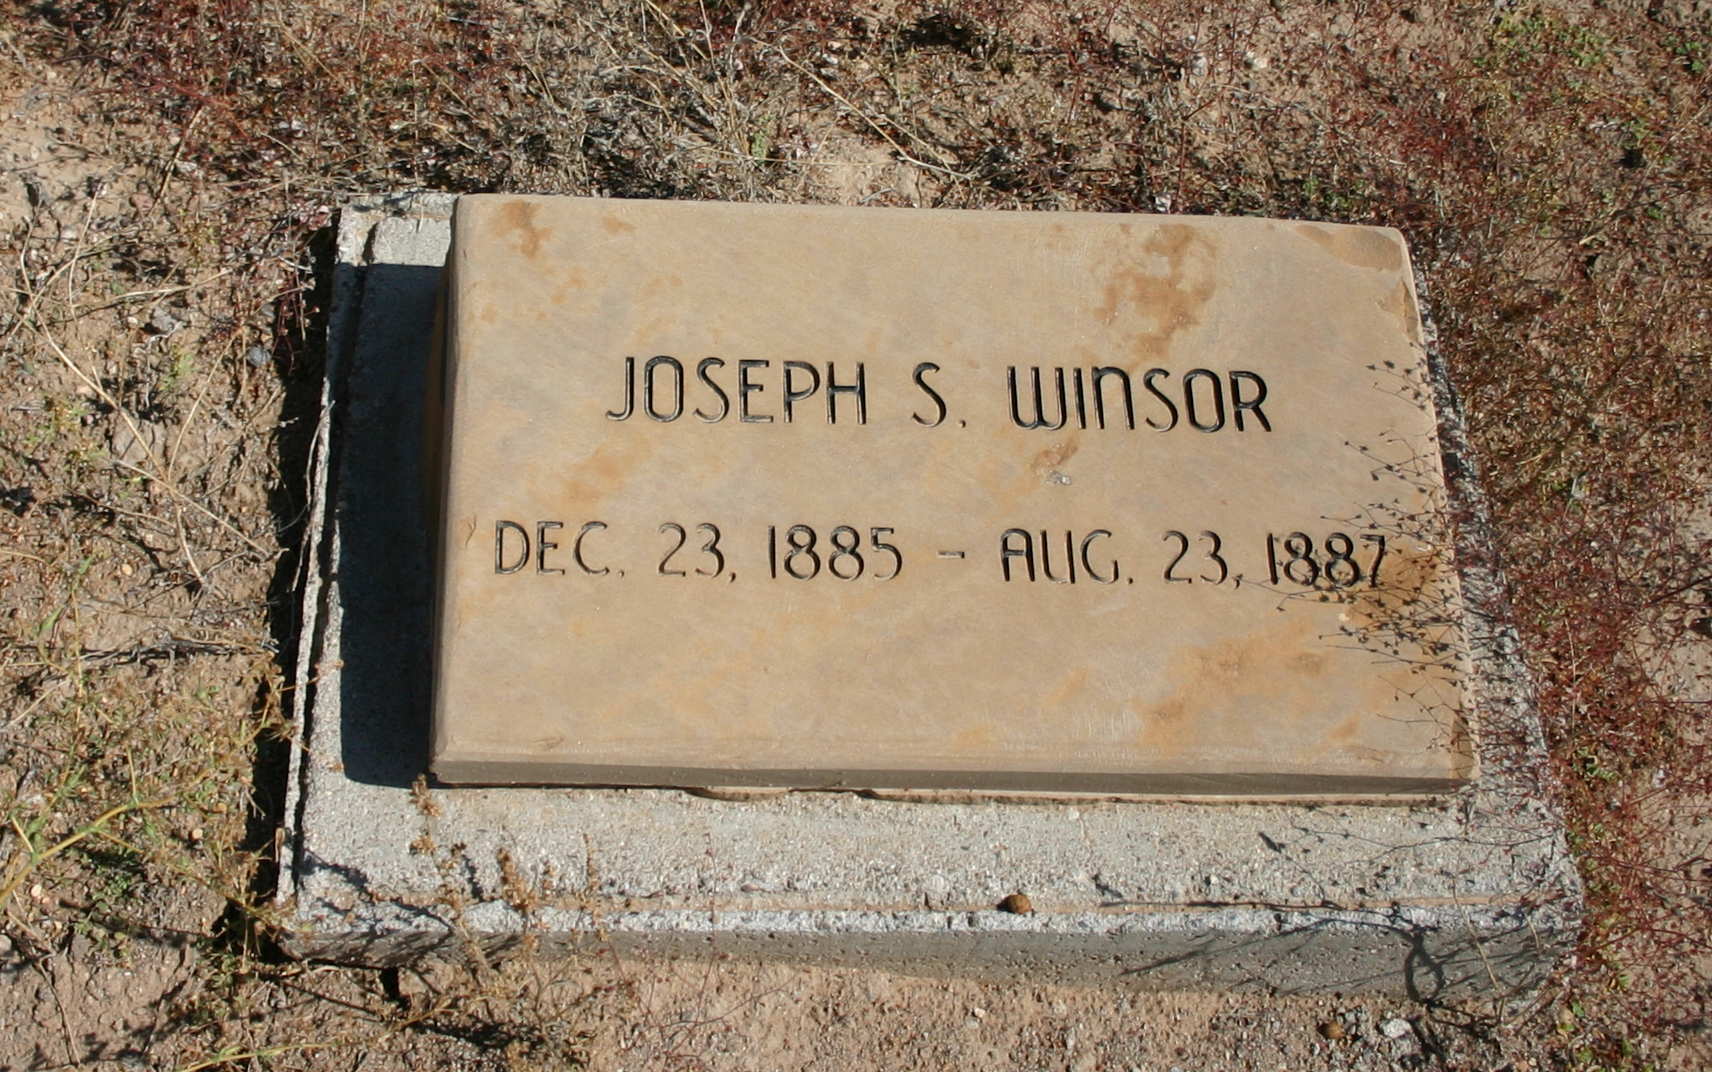 Joseph S. Winsor gravestone at the Hebron Cemetery